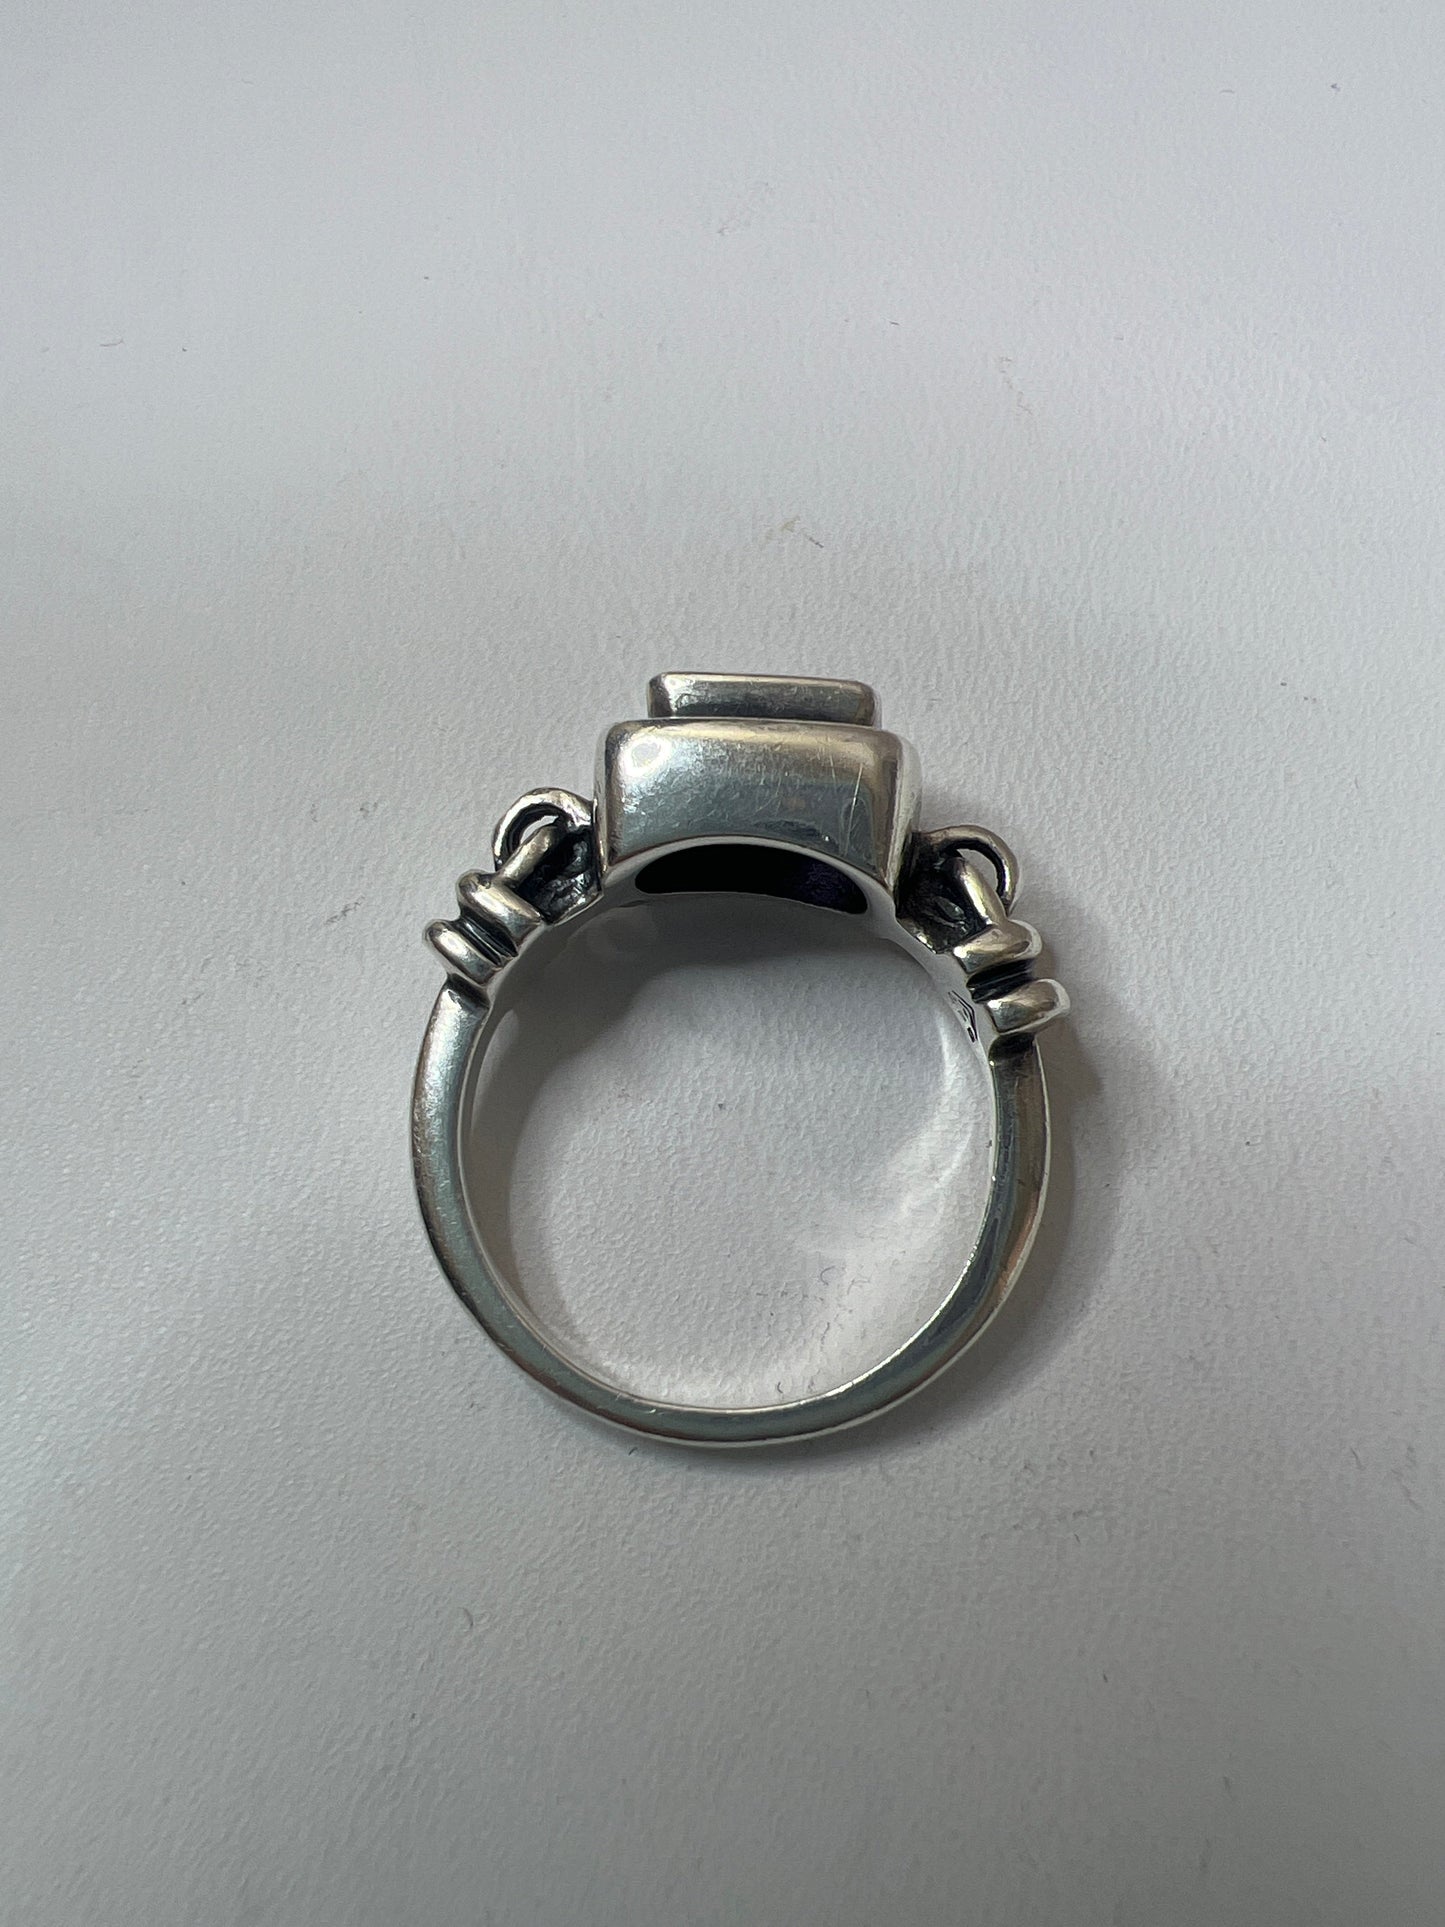 Ring Designer Silpada, Size 7.5